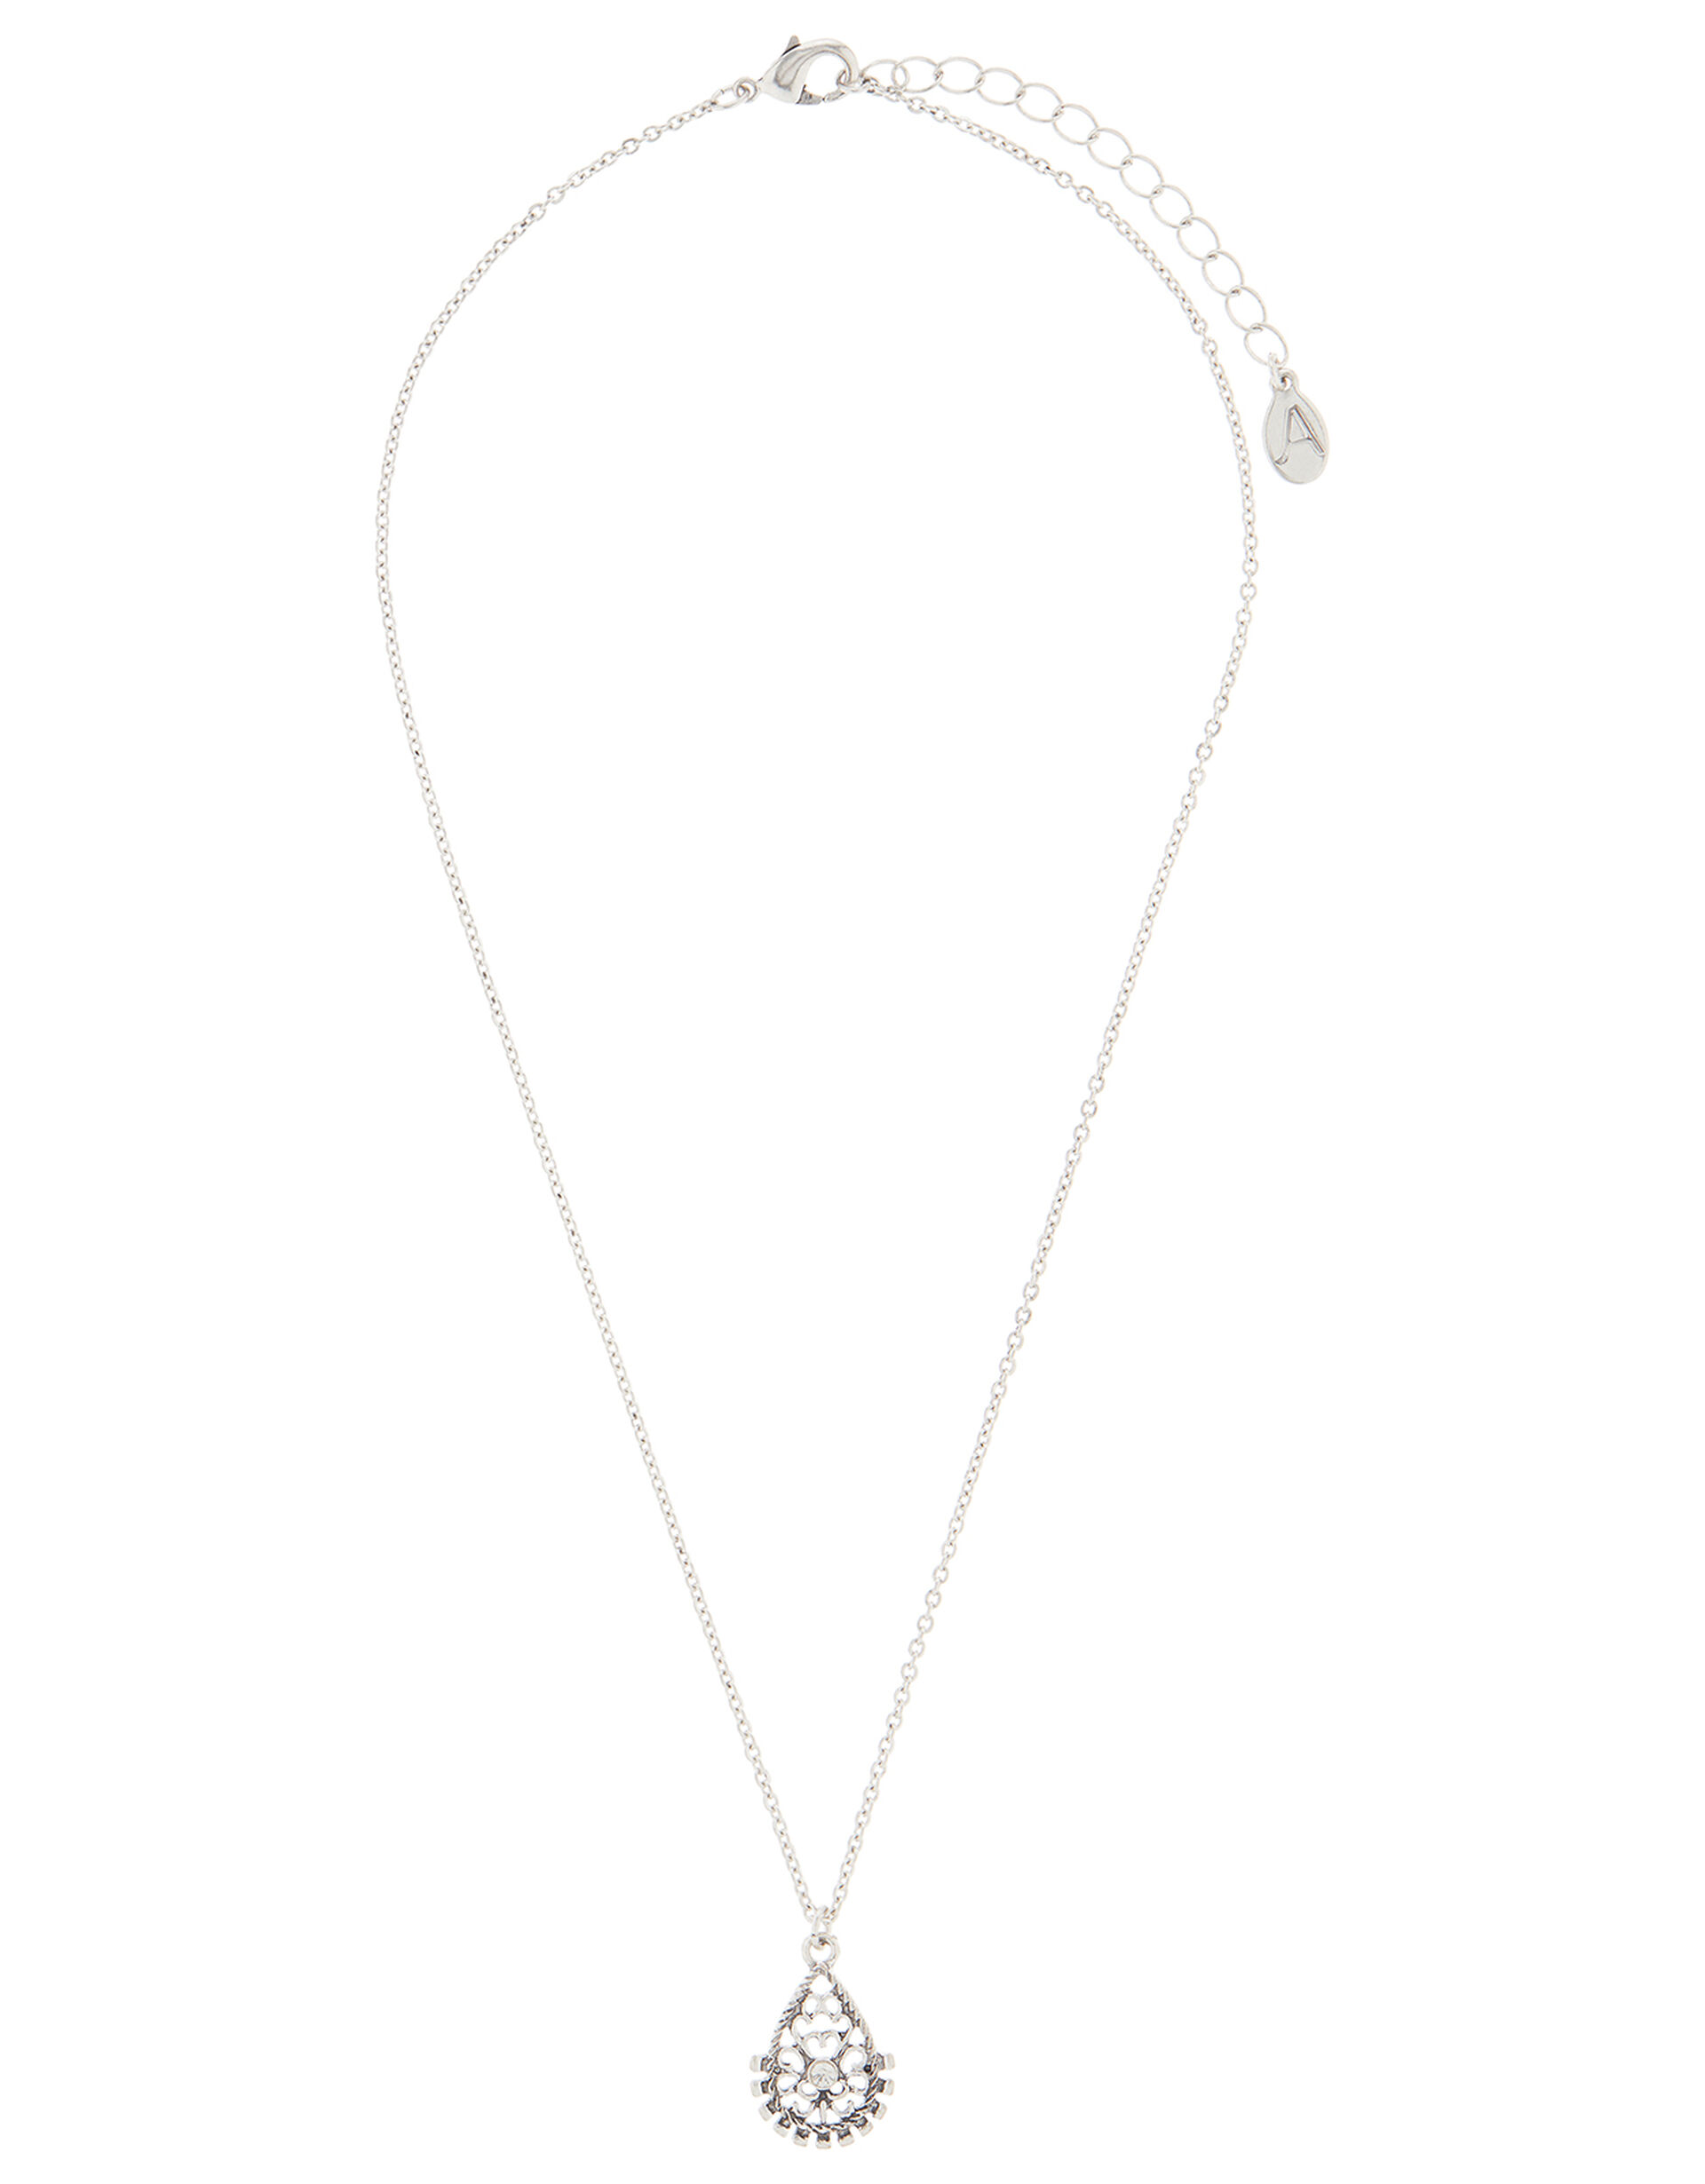 Crystal Teardrop Pendant Necklace, , large